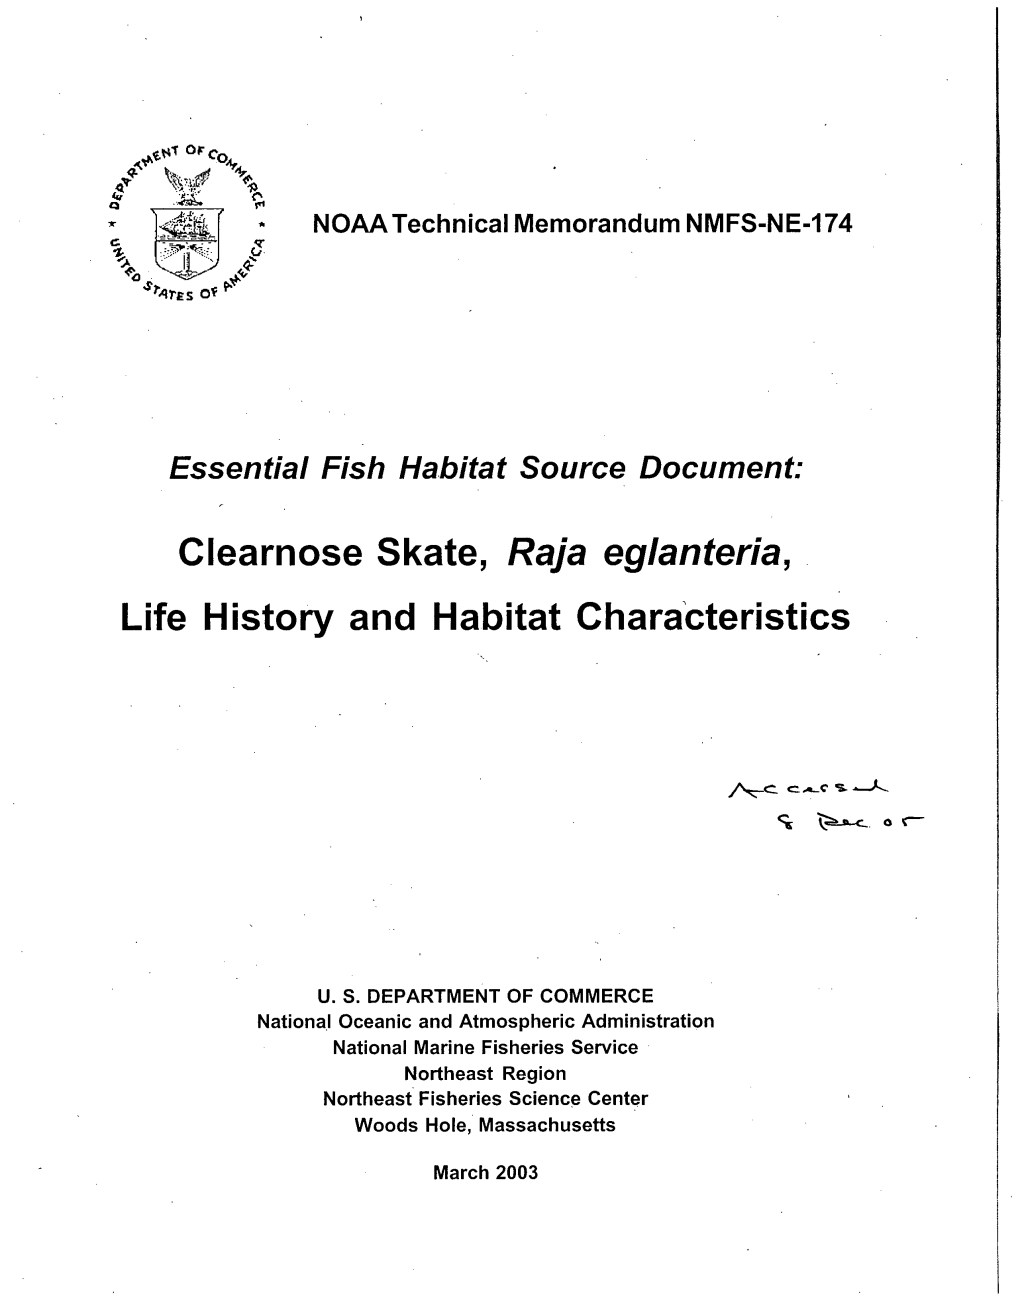 NOAA Technical Memorandum NMFS-NE-174, Essential Fish